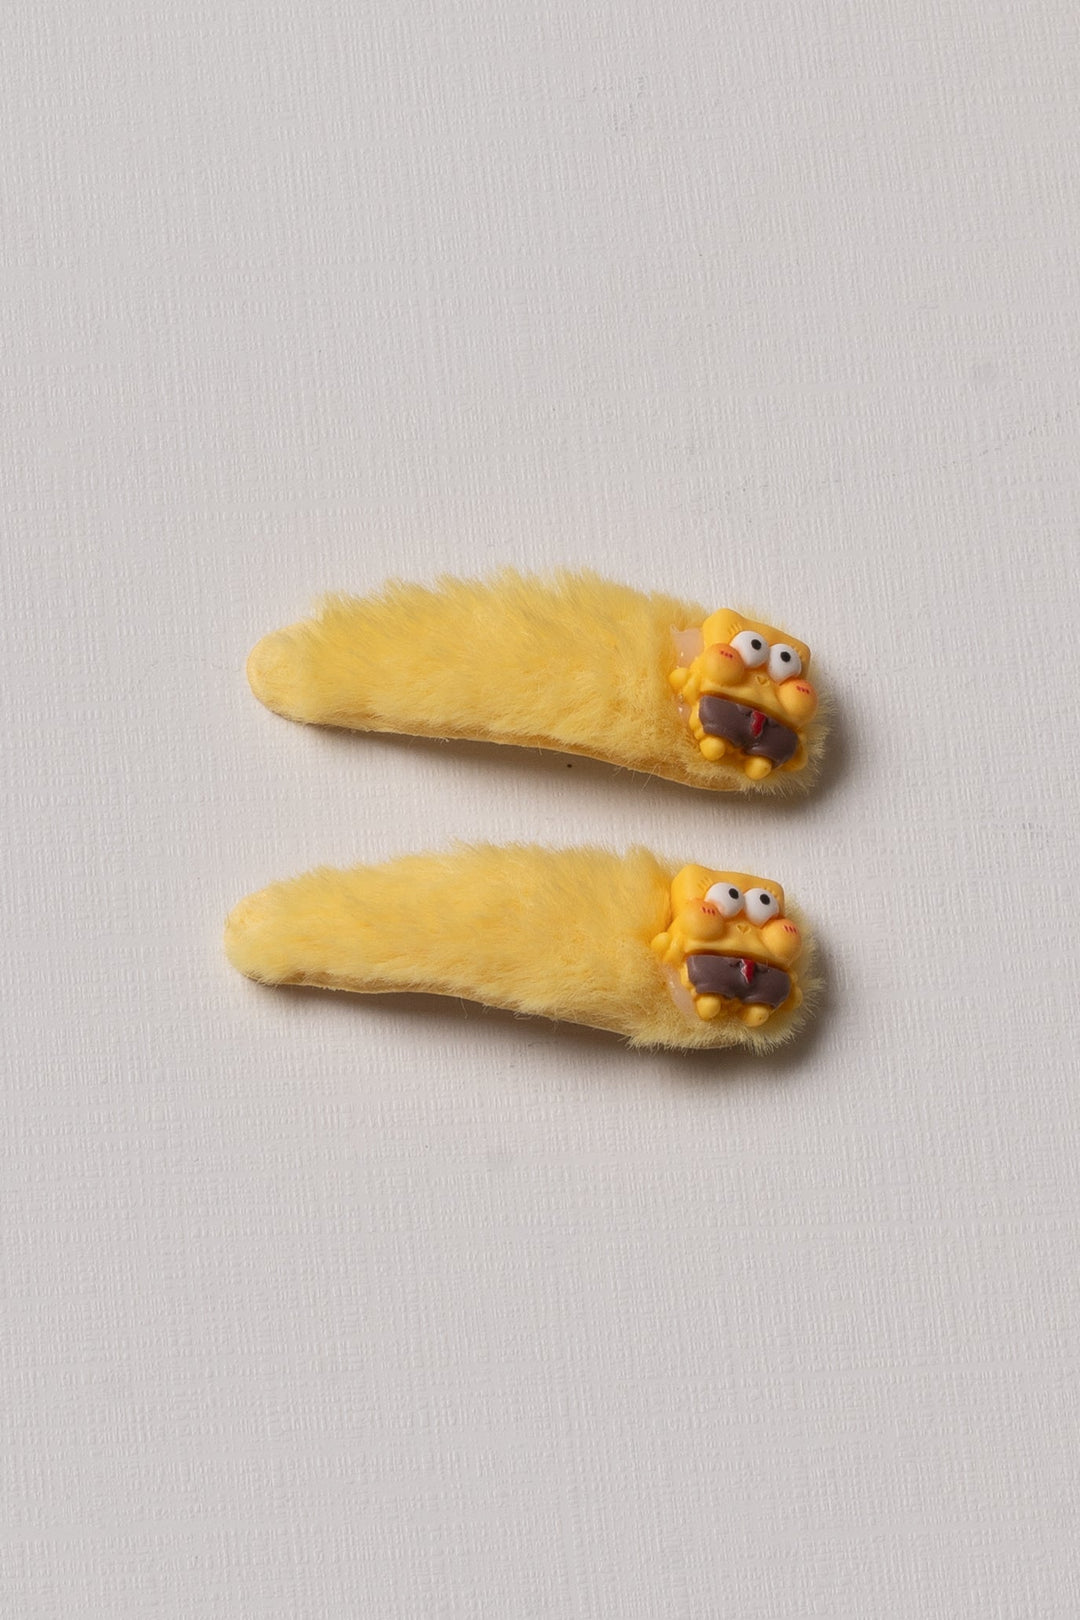 The Nesavu Tick Tac Clip Sunny Yellow Furry Character Tic Tac Hair Clips Nesavu Yellow / Style 3 JHTT12C Charming Yellow Furry Tic Tac Hair Clips for Kids | Cute & Playful | The Nesavu